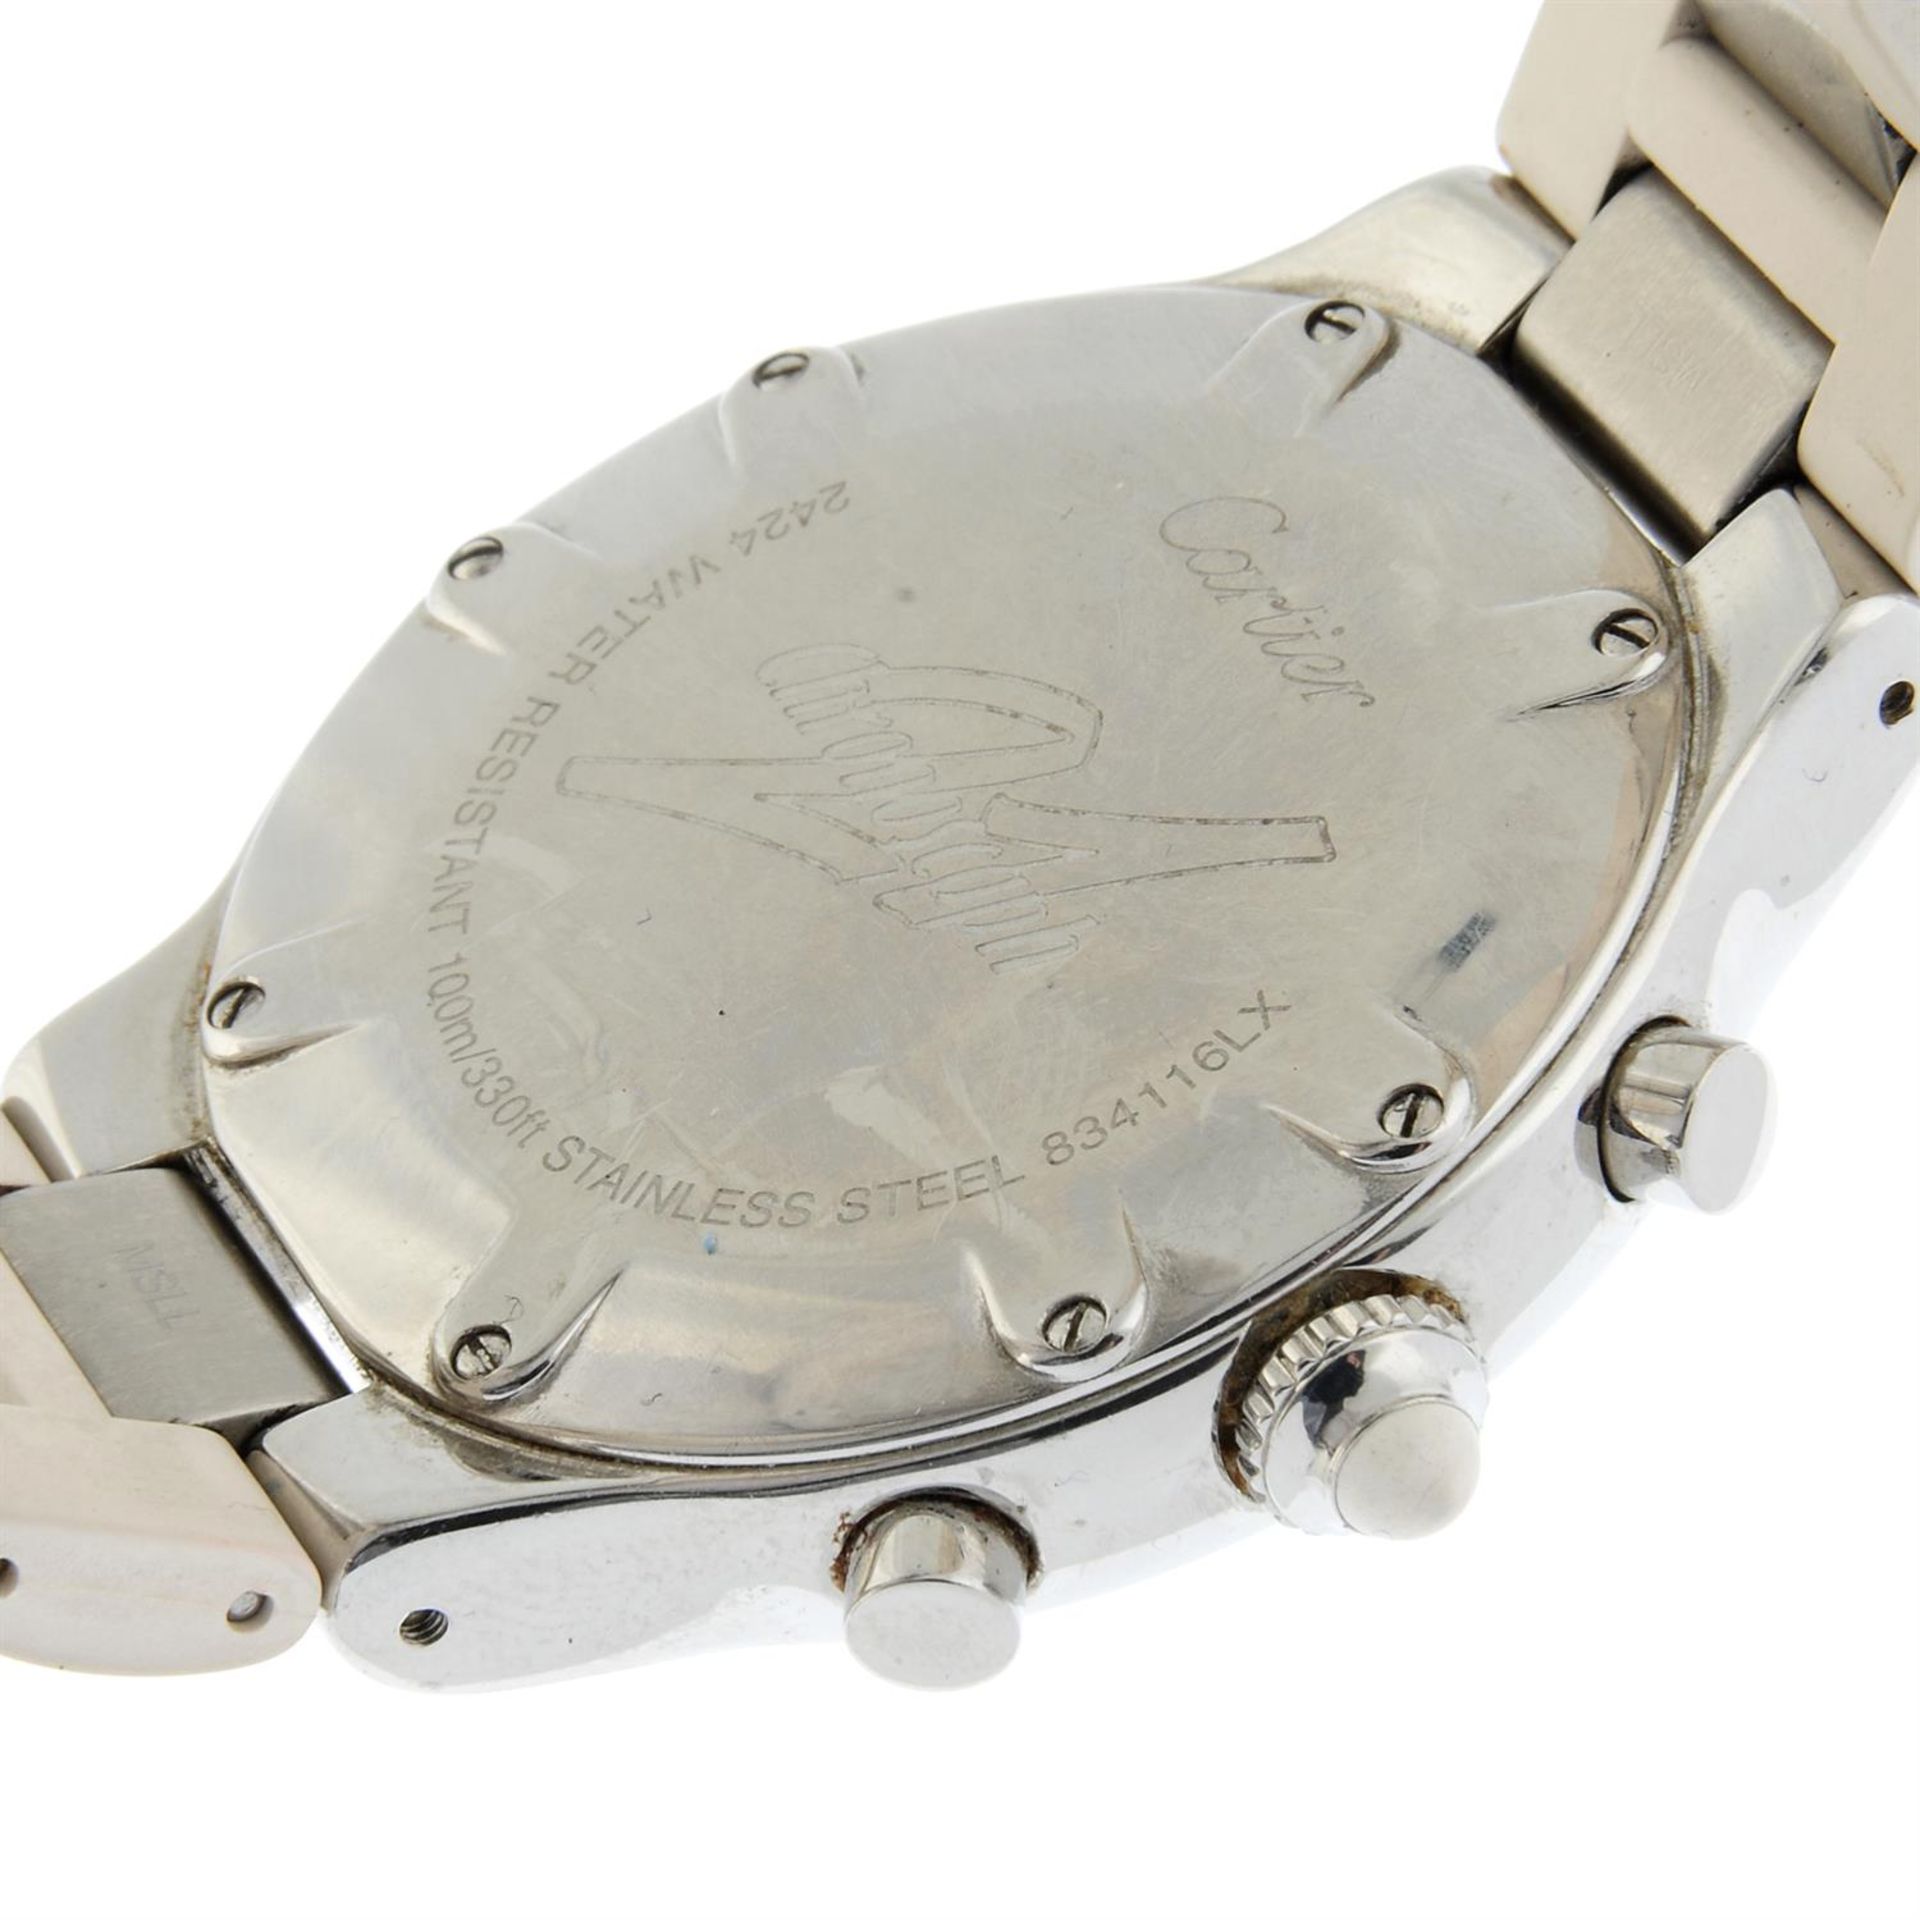 Cartier - a Chronoscaph 21 watch, 38mm. - Image 4 of 5